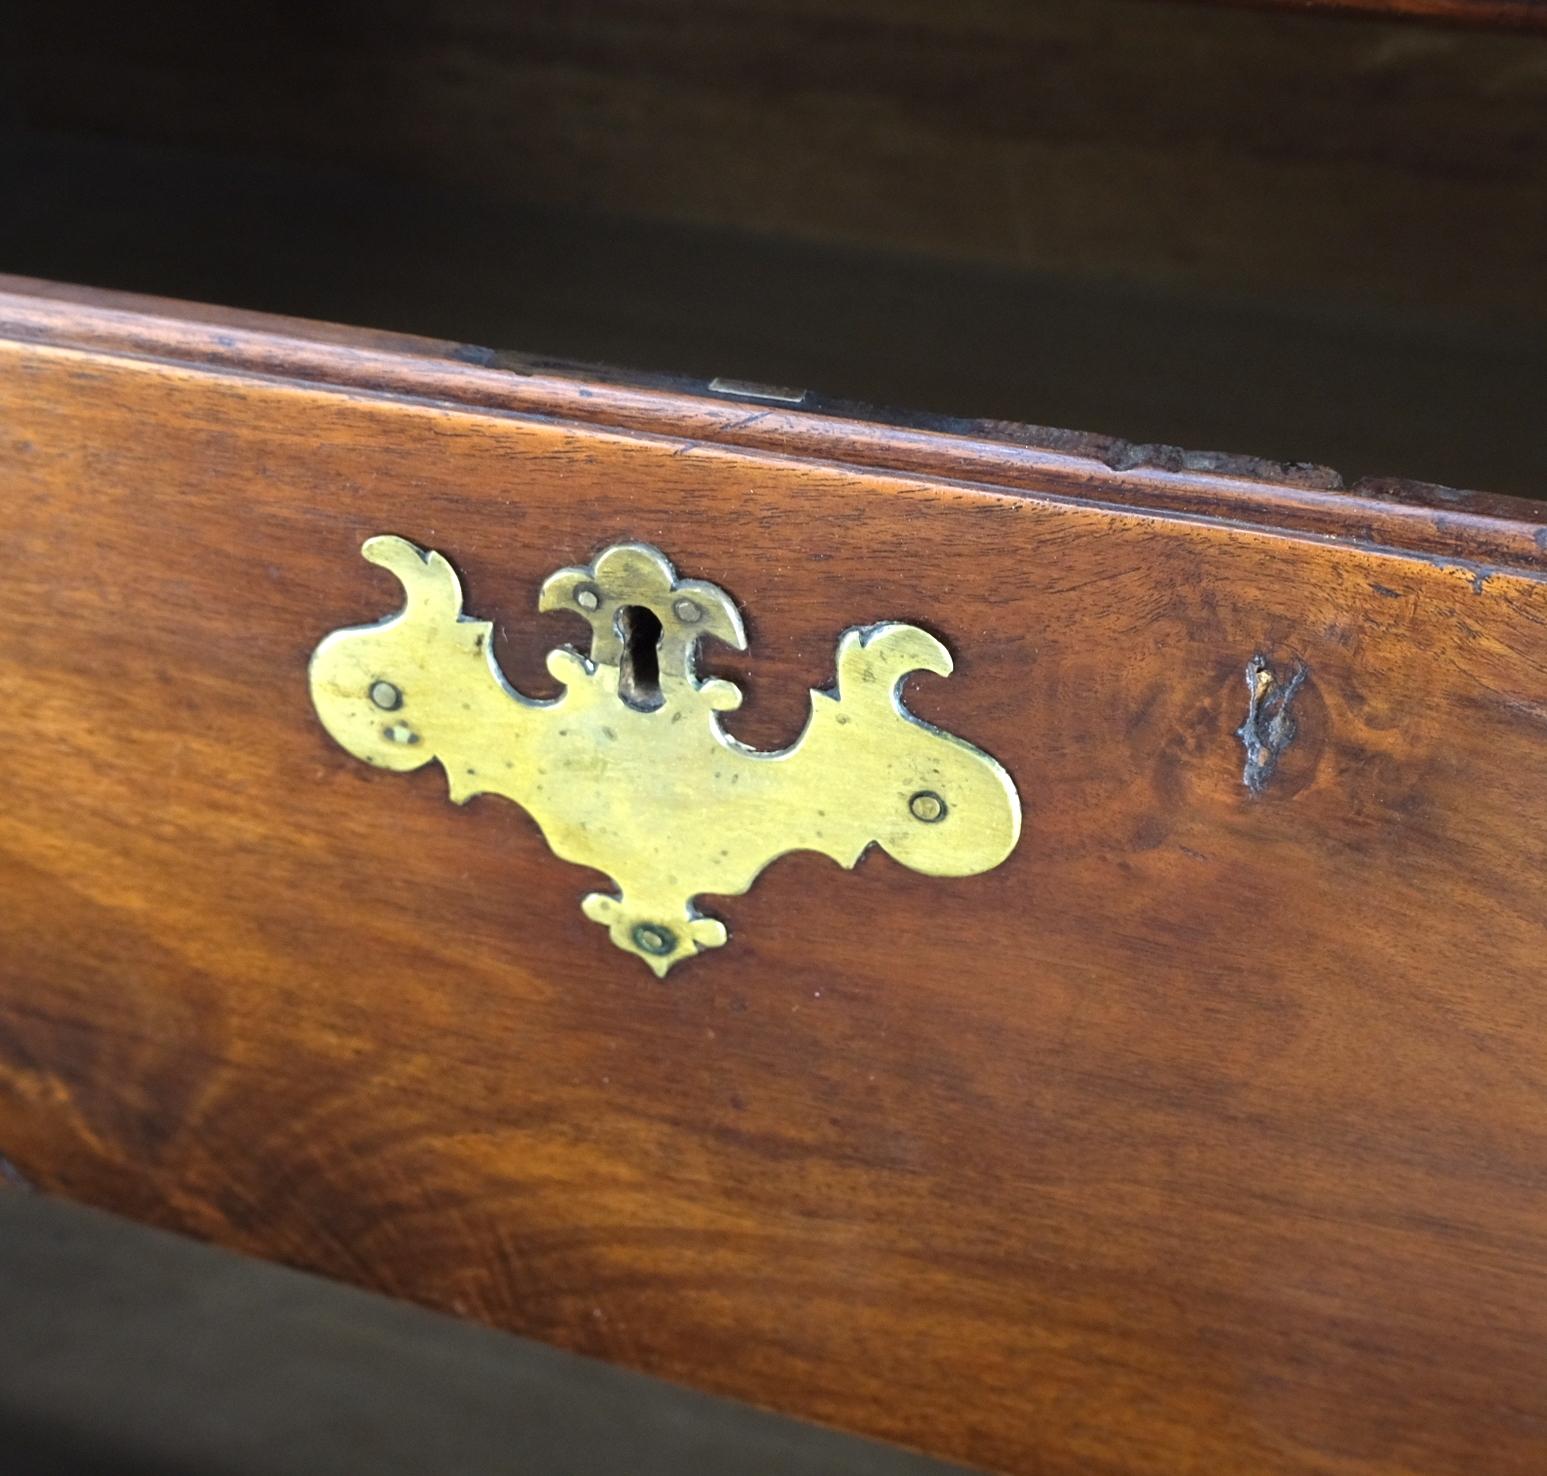 antique mahogany dresser value